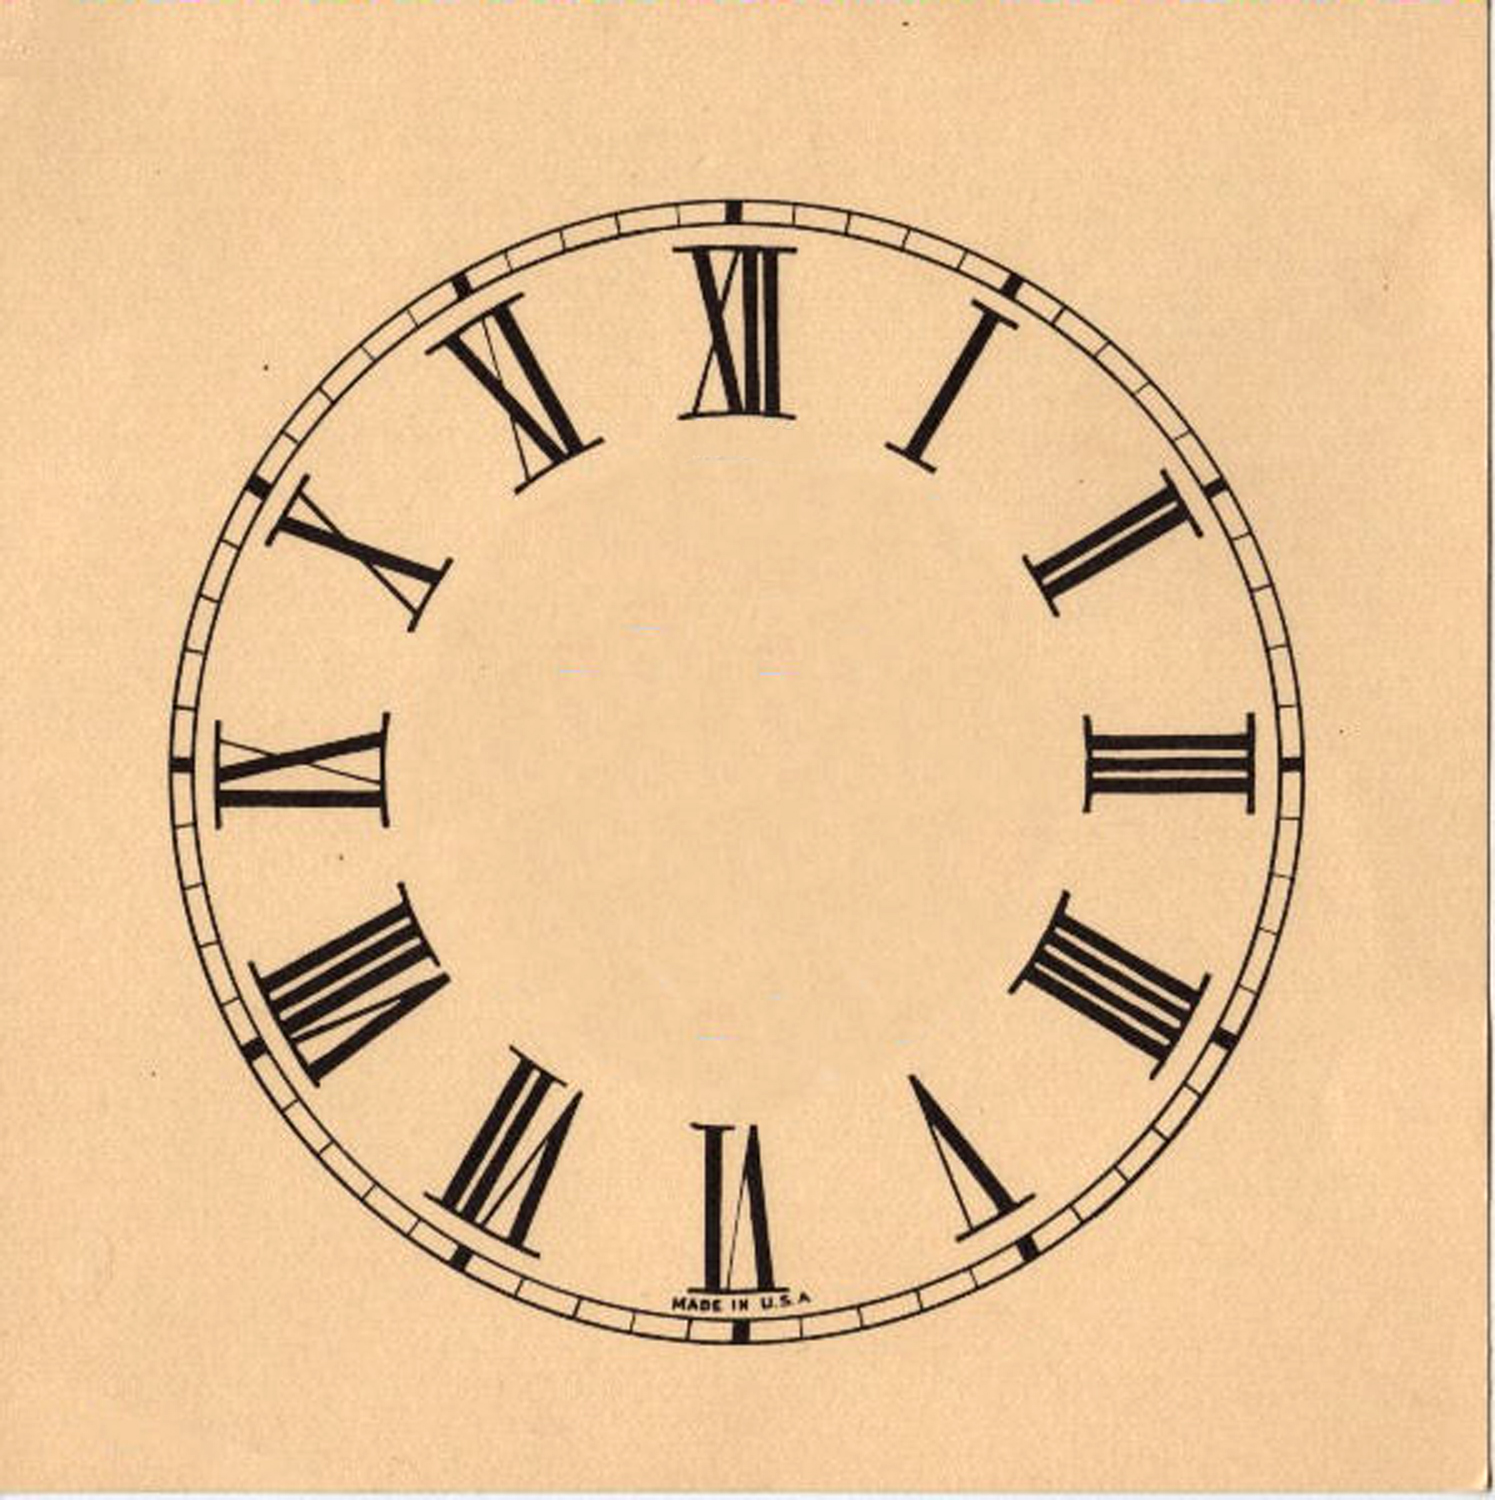 clipart clock face antique